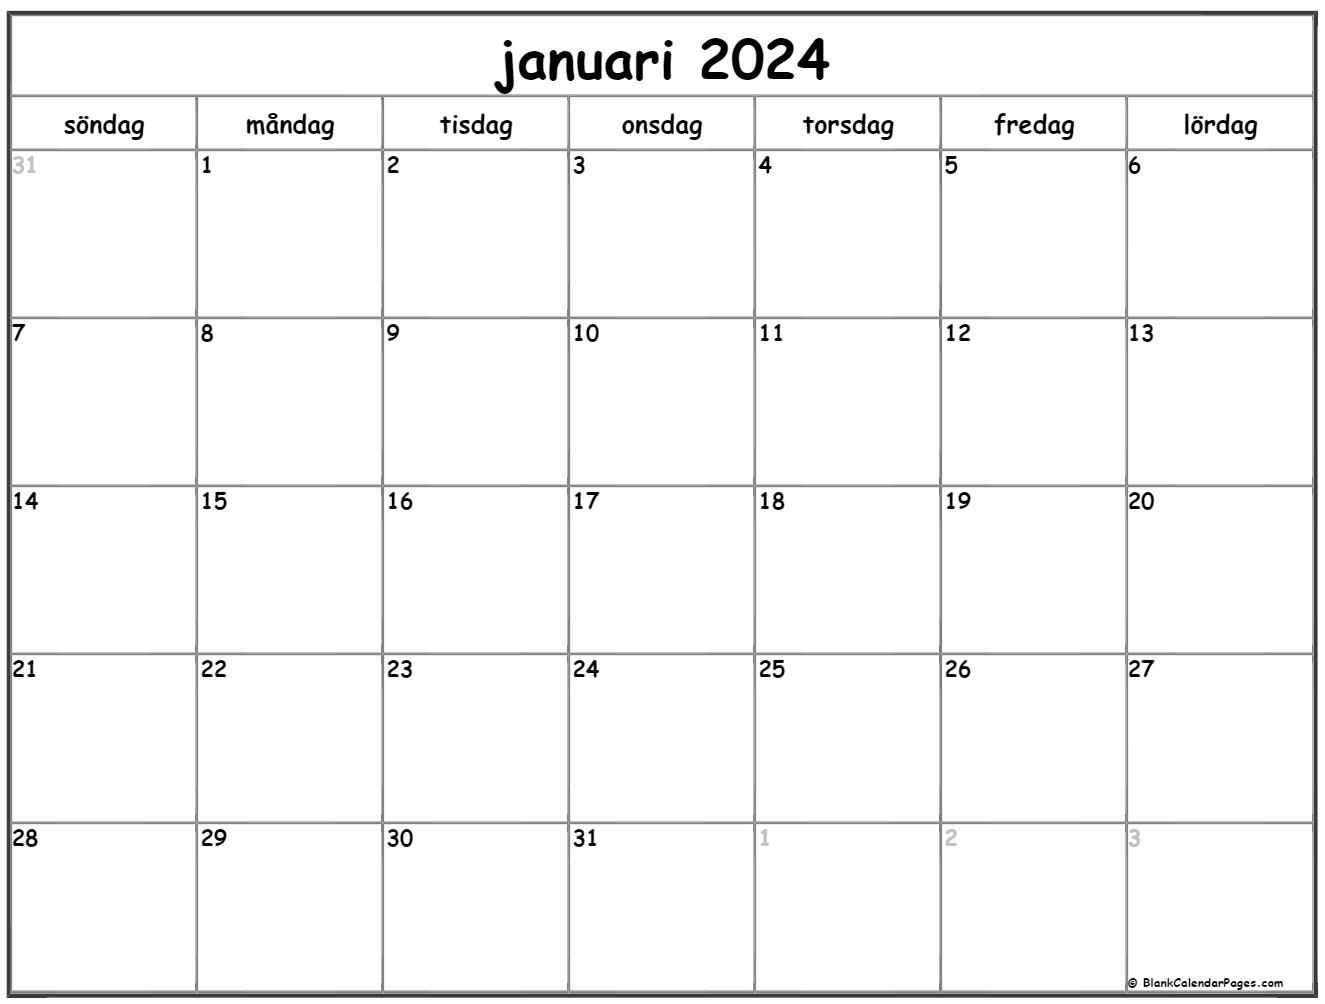 januari 2024 kalender Svenska | Kalender januari